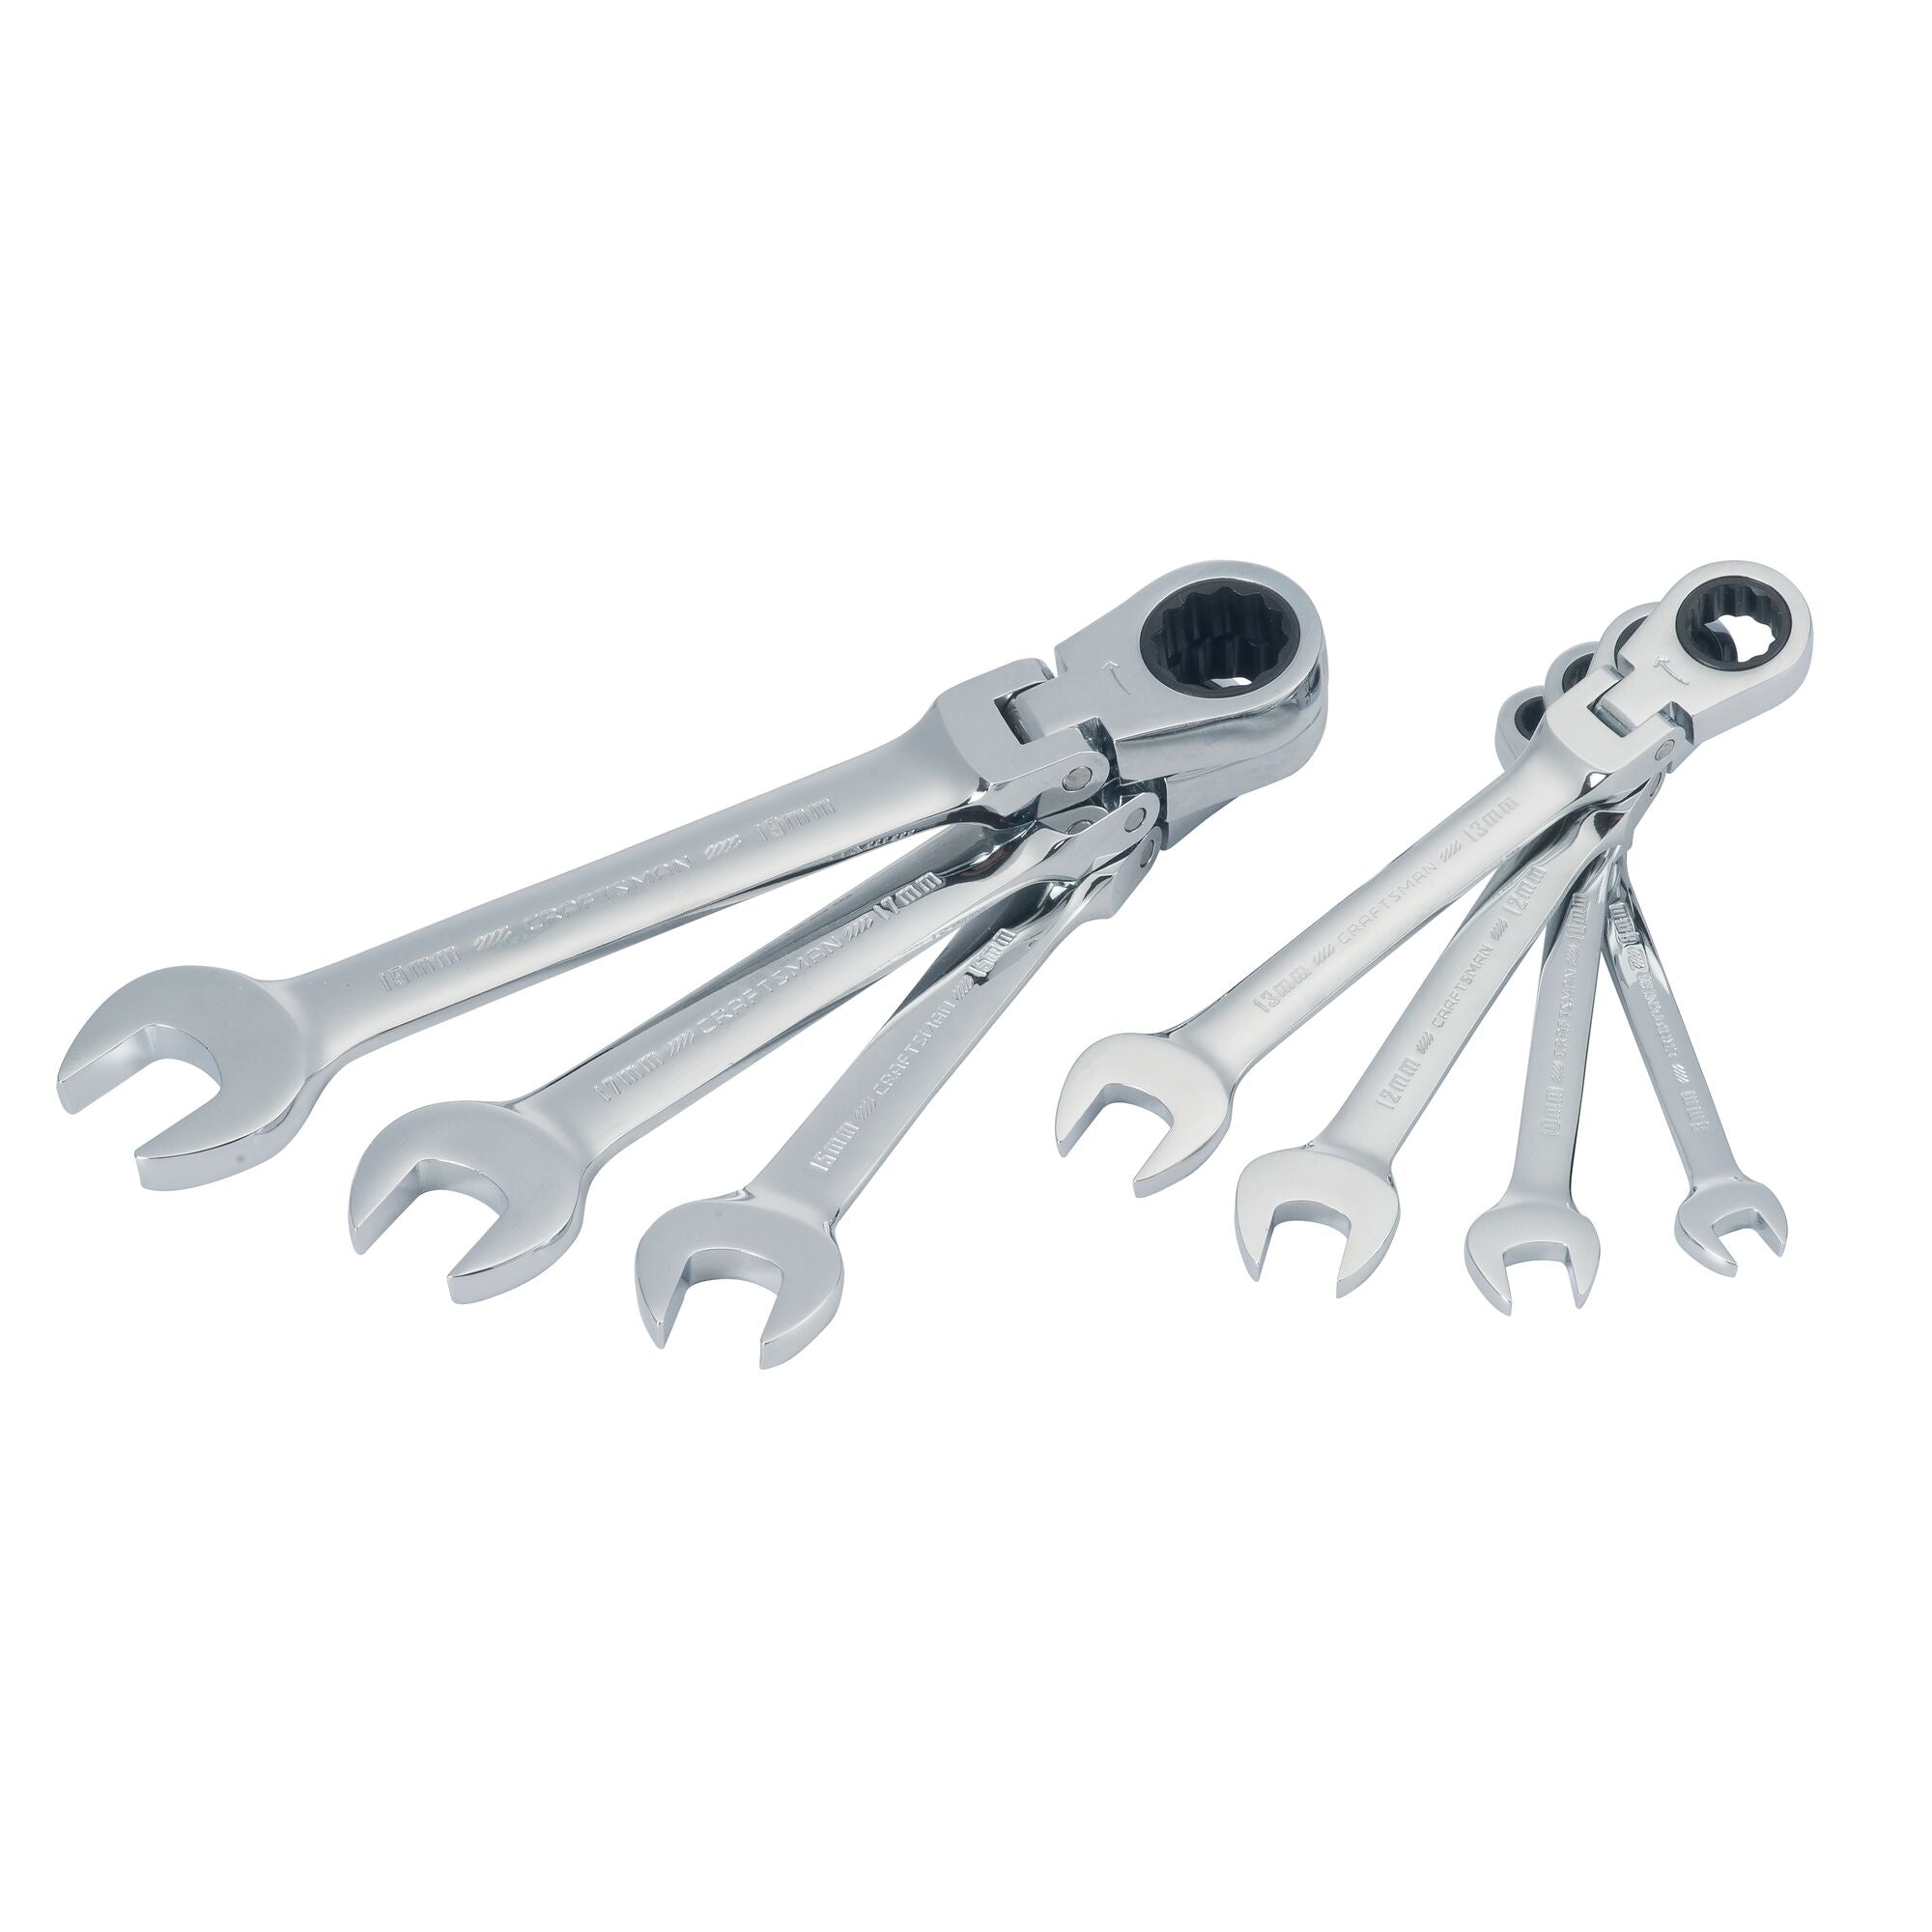 Metric Flex Head Ratchet Wrench Set (7 pc) | CRAFTSMAN